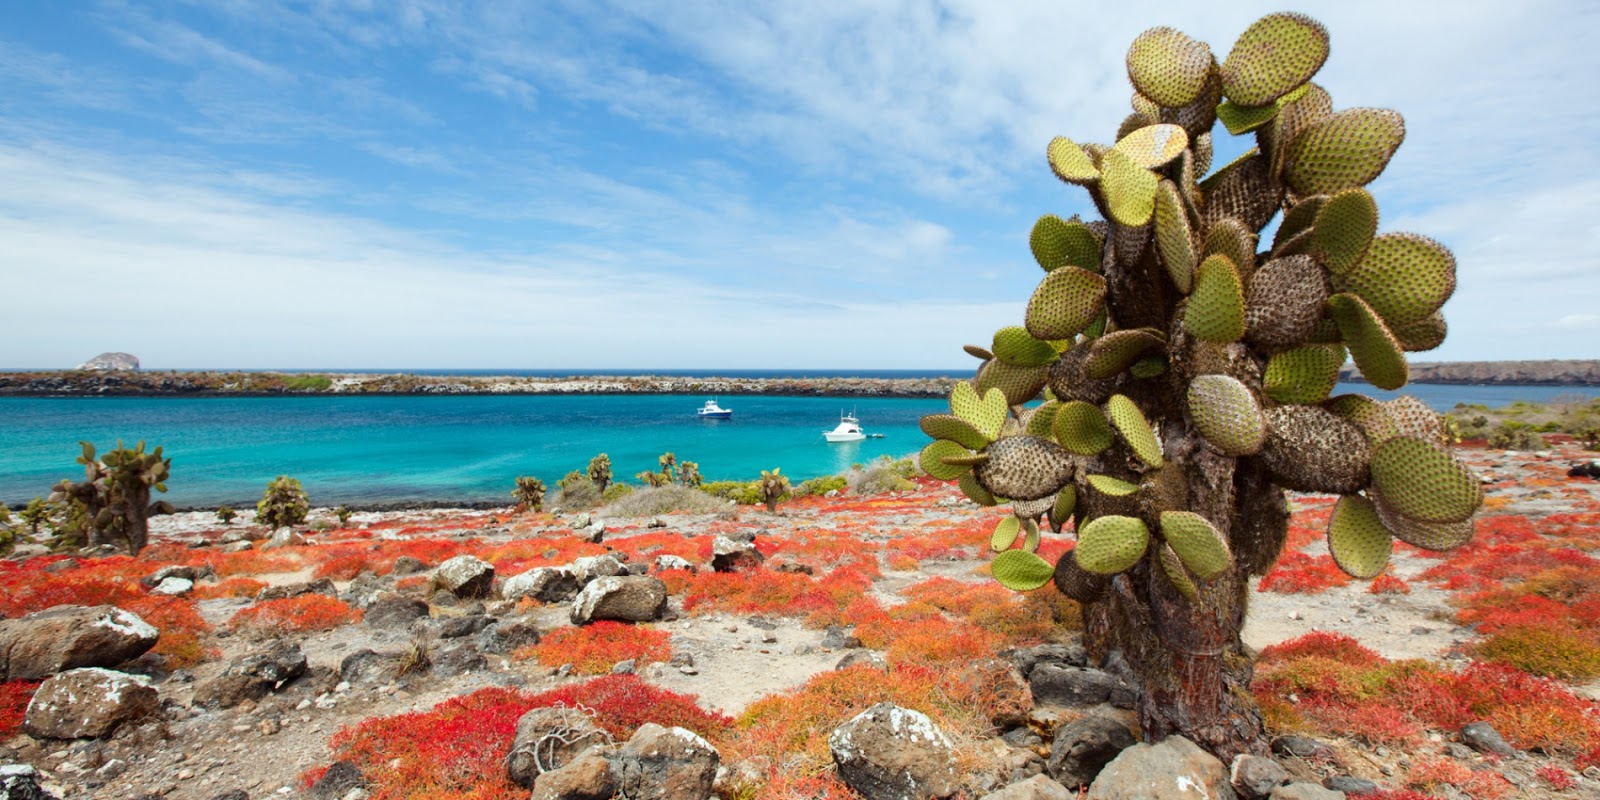 Danh lam thắng cảnh Ecuador: Quần đảo Galapagos